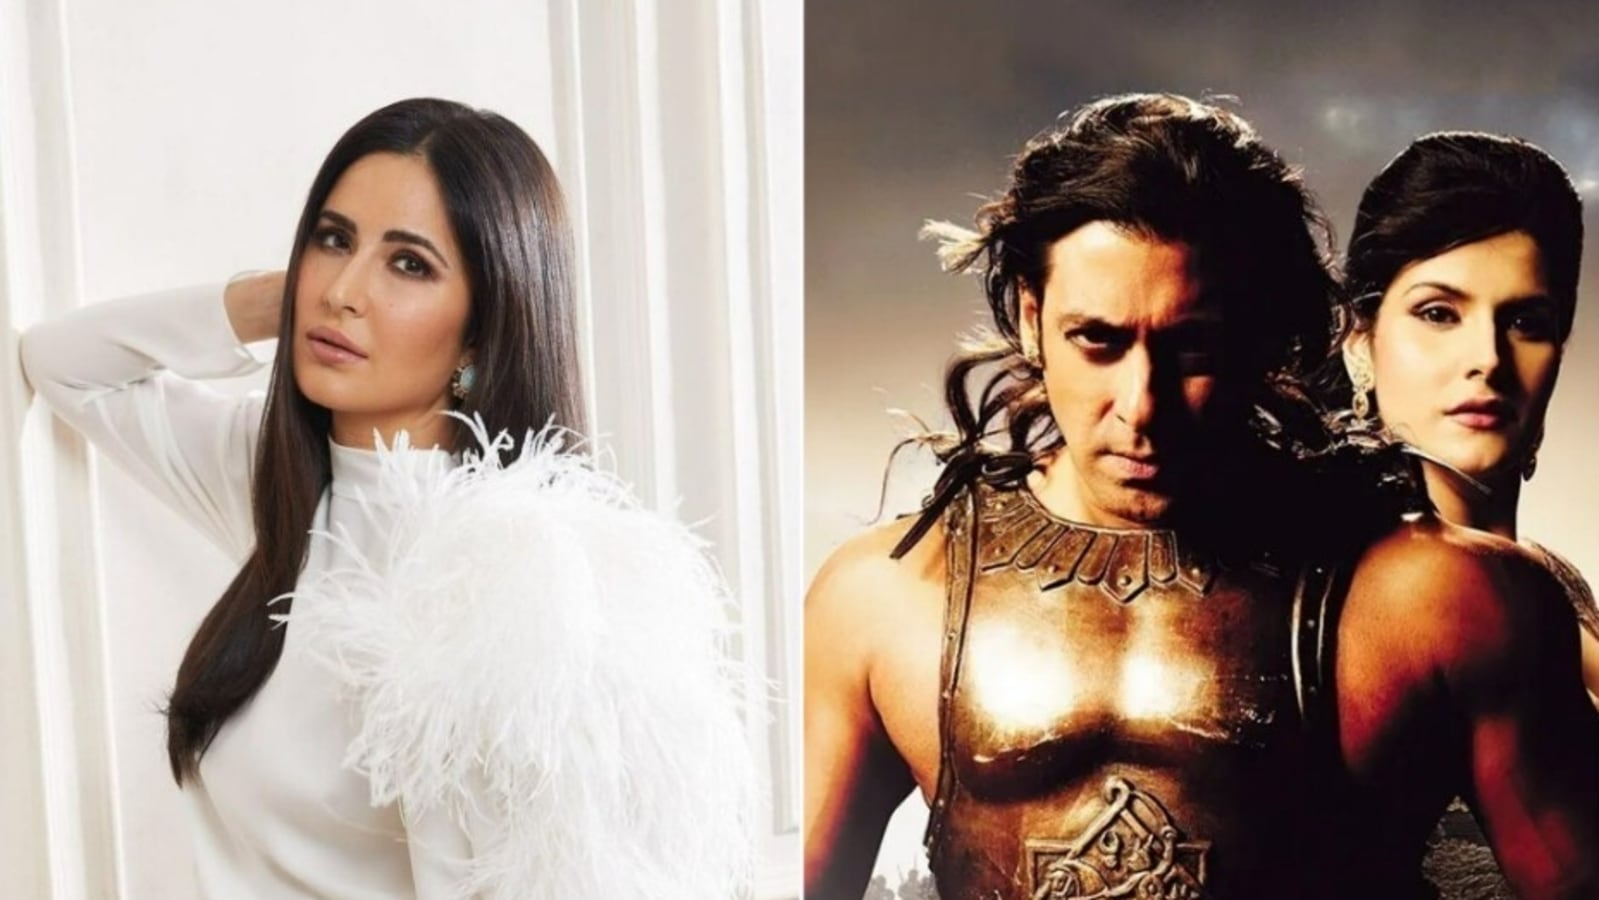 Salman Khan And Katrina Xxx - When Katrina Kaif spoke about Salman working with 'girls who look like her'  | Bollywood - Hindustan Times